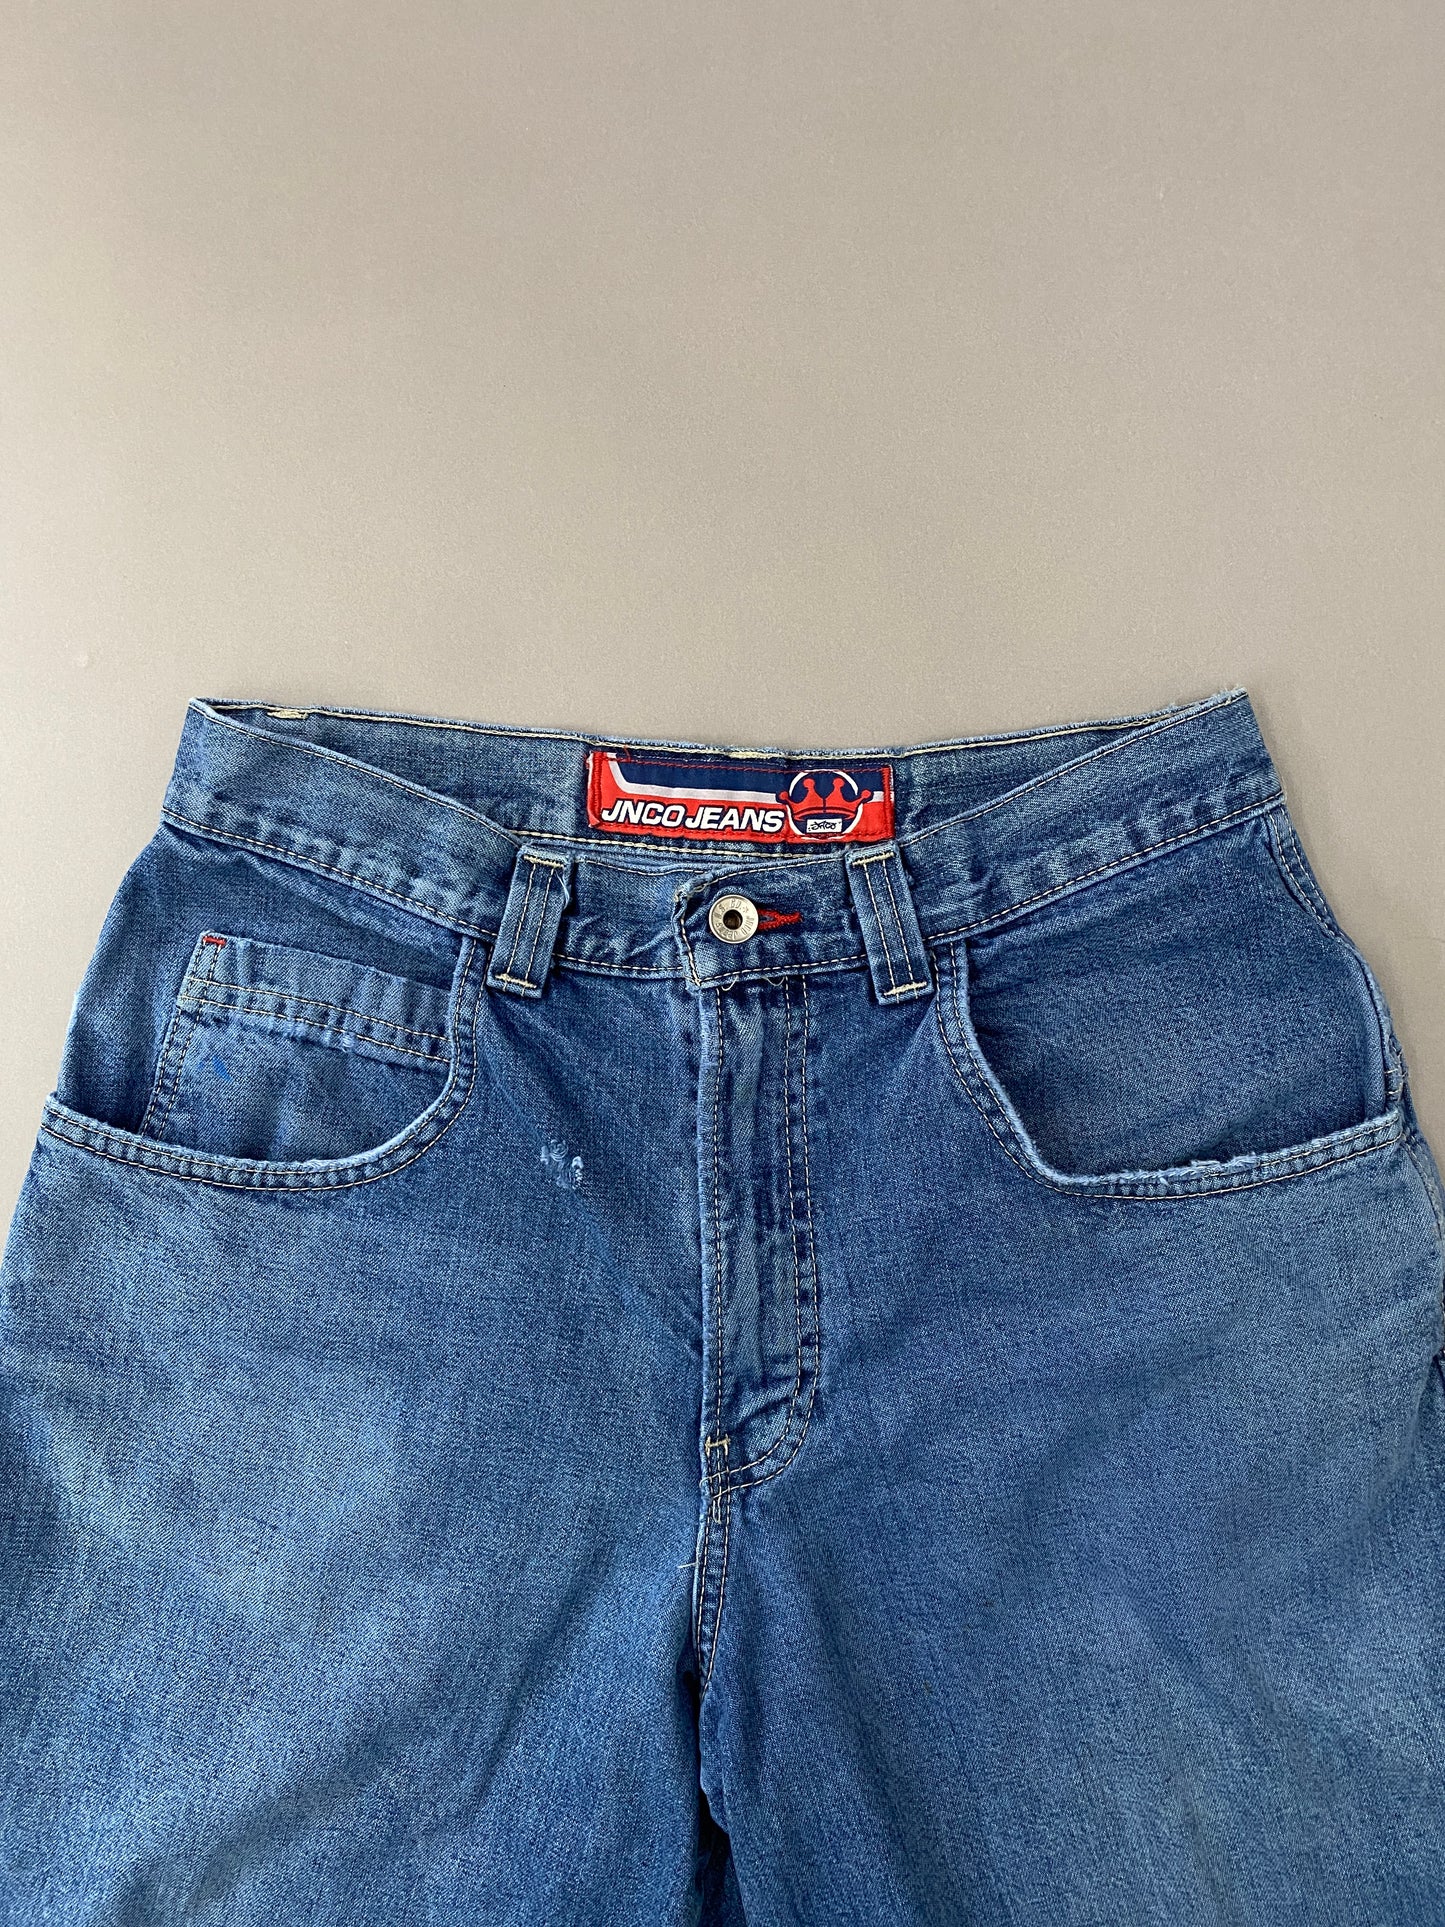 JNCO Vintage Shorts - 32